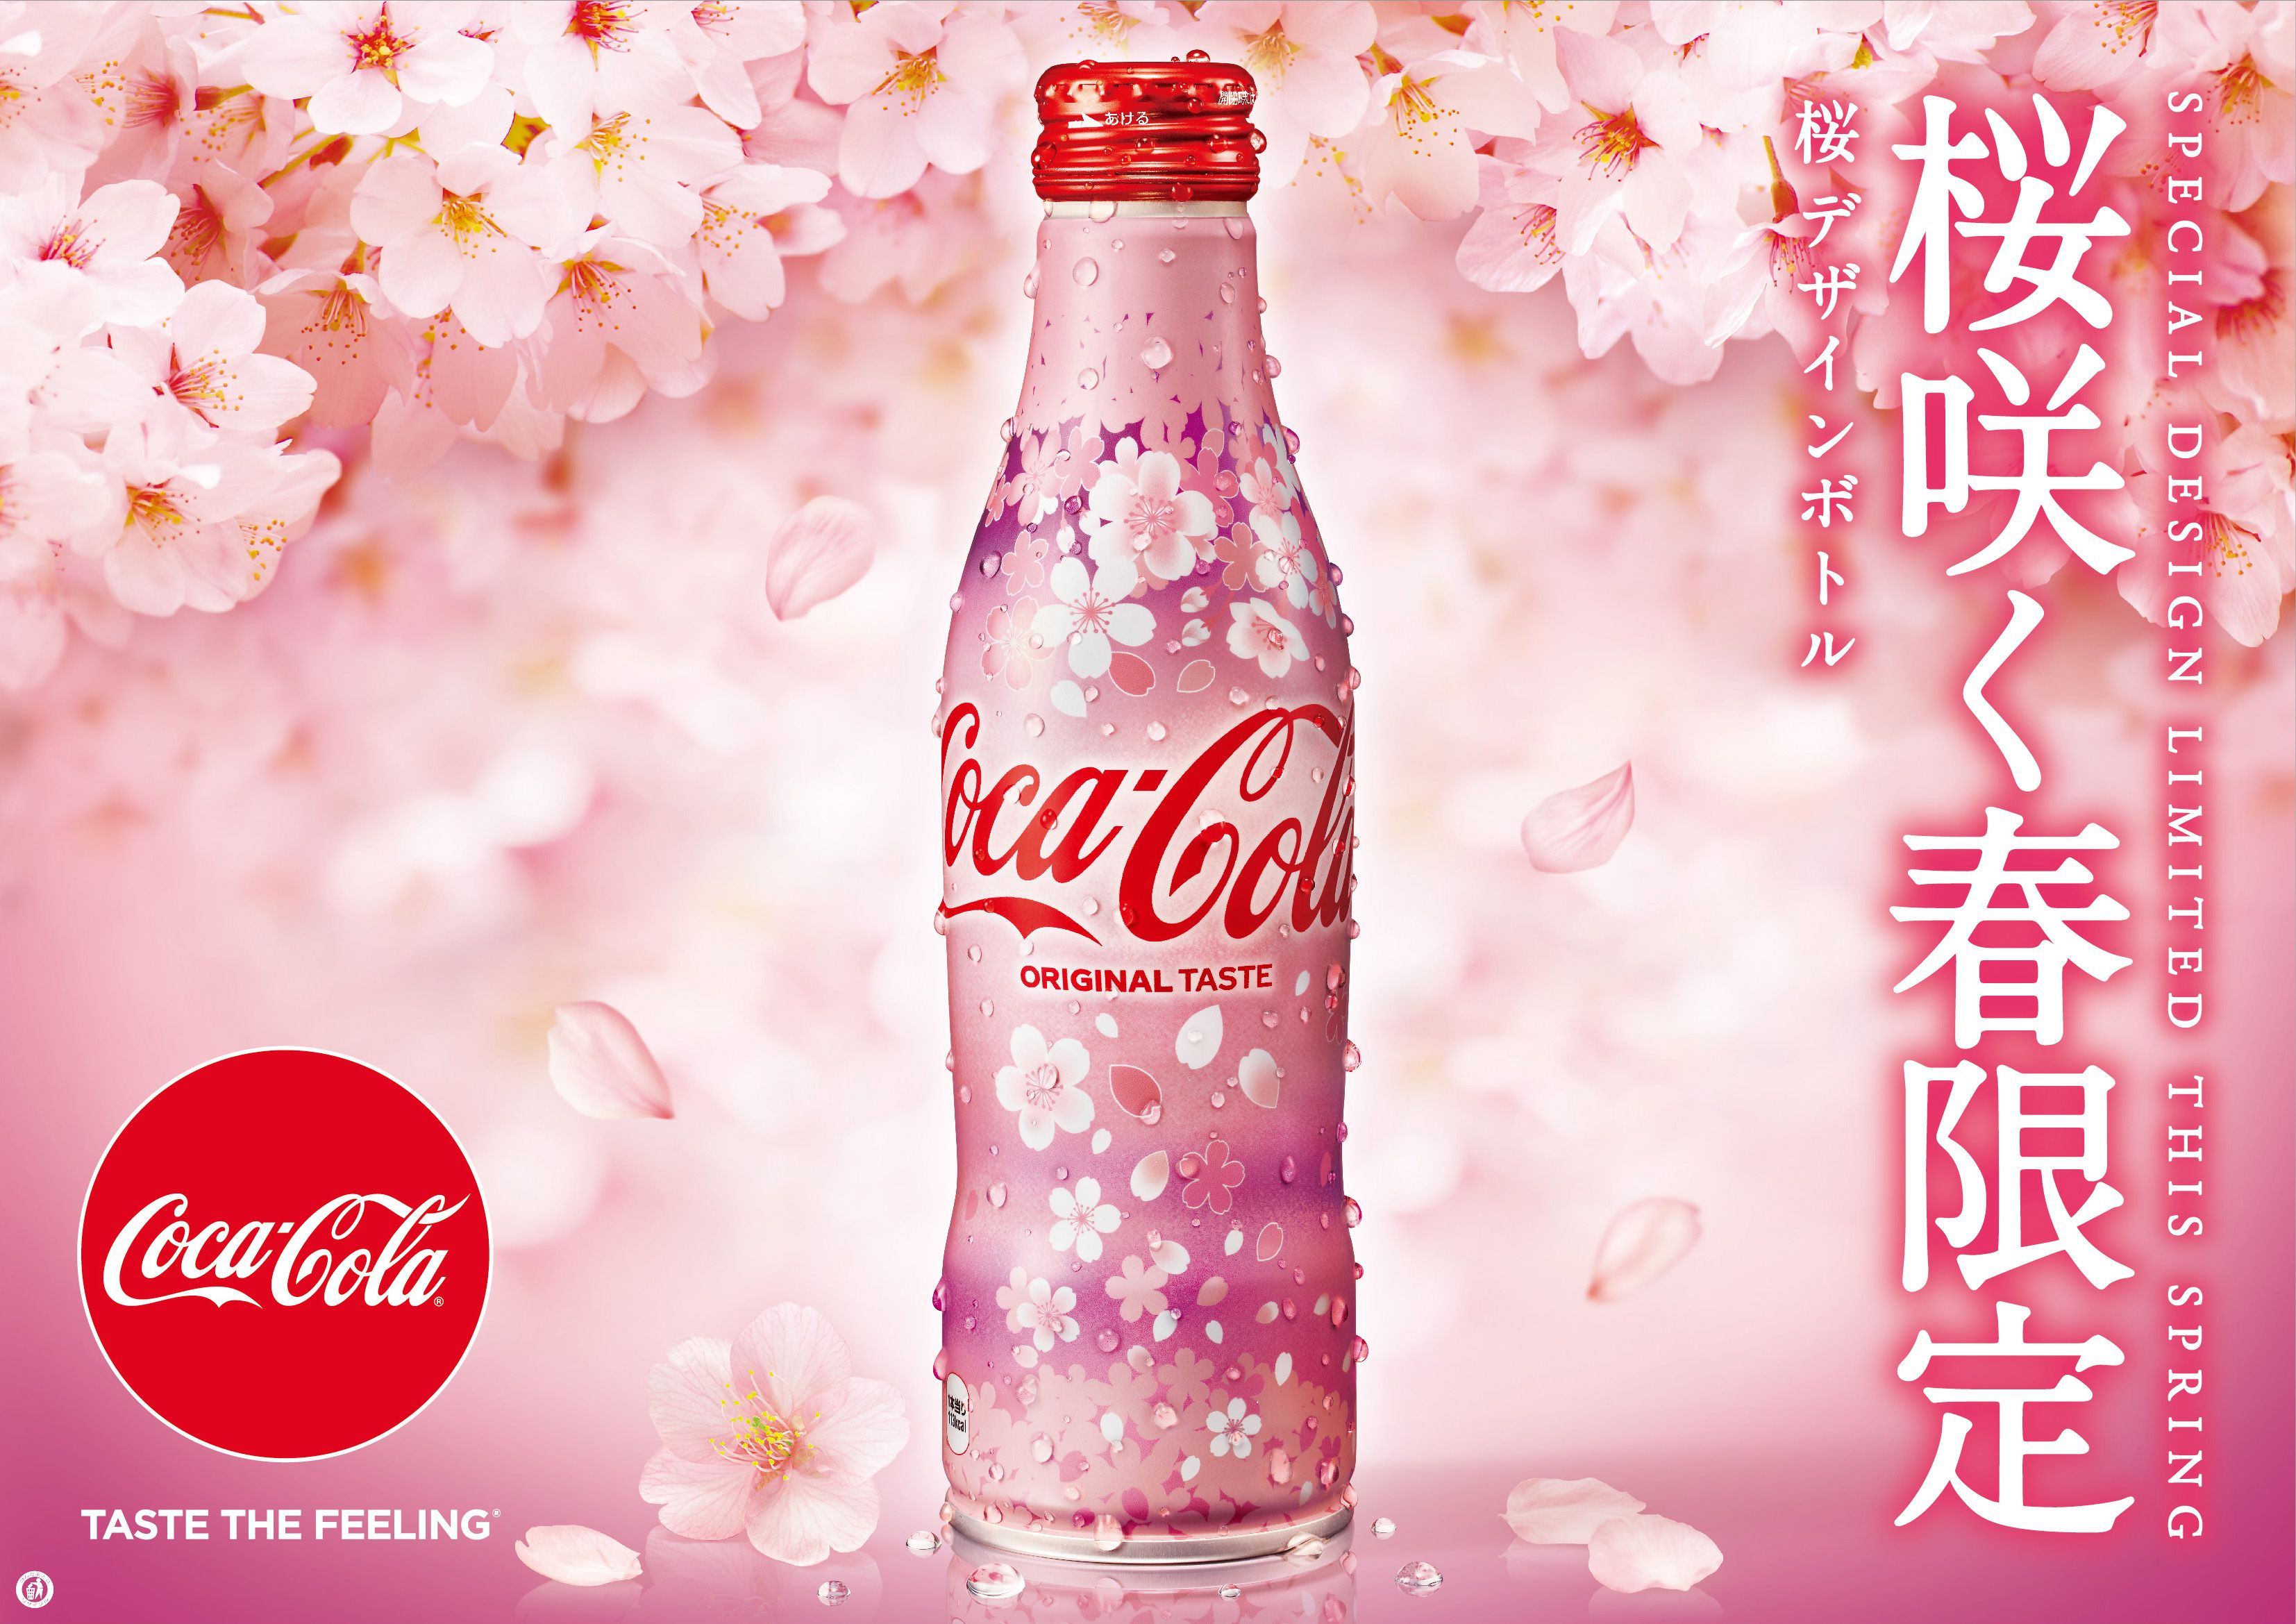 Coca Cola Japan Unveils New Sakura Design Bottle For Cherry Blossom Season 2019. SoraNews24 Japan News